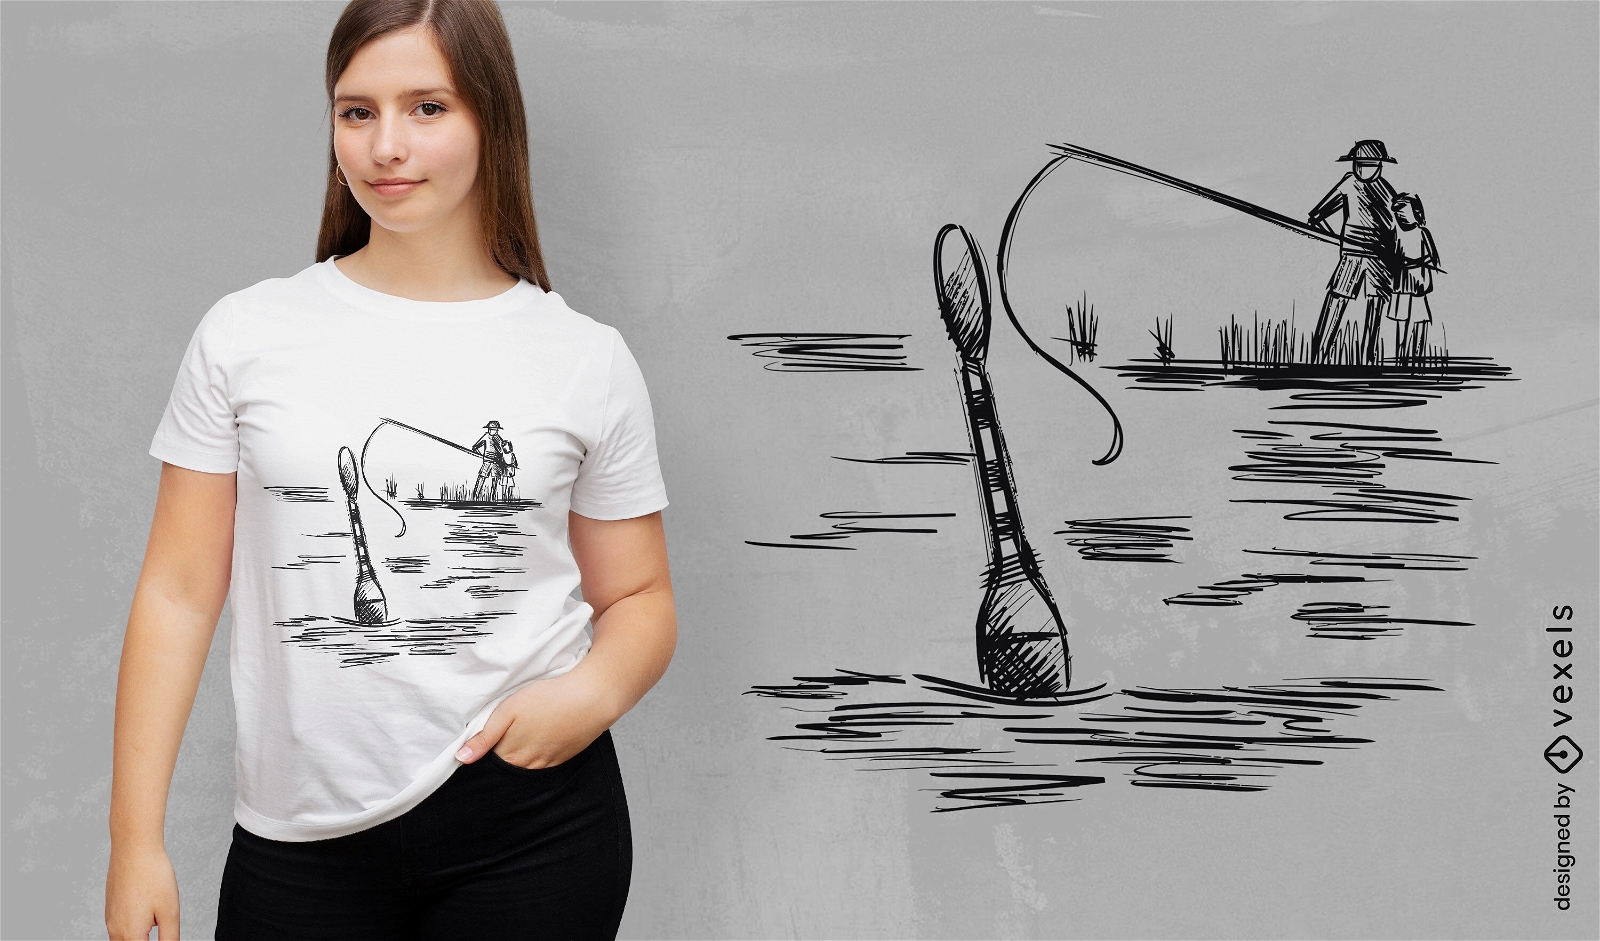 Sketch of a fisherman t-shirt design